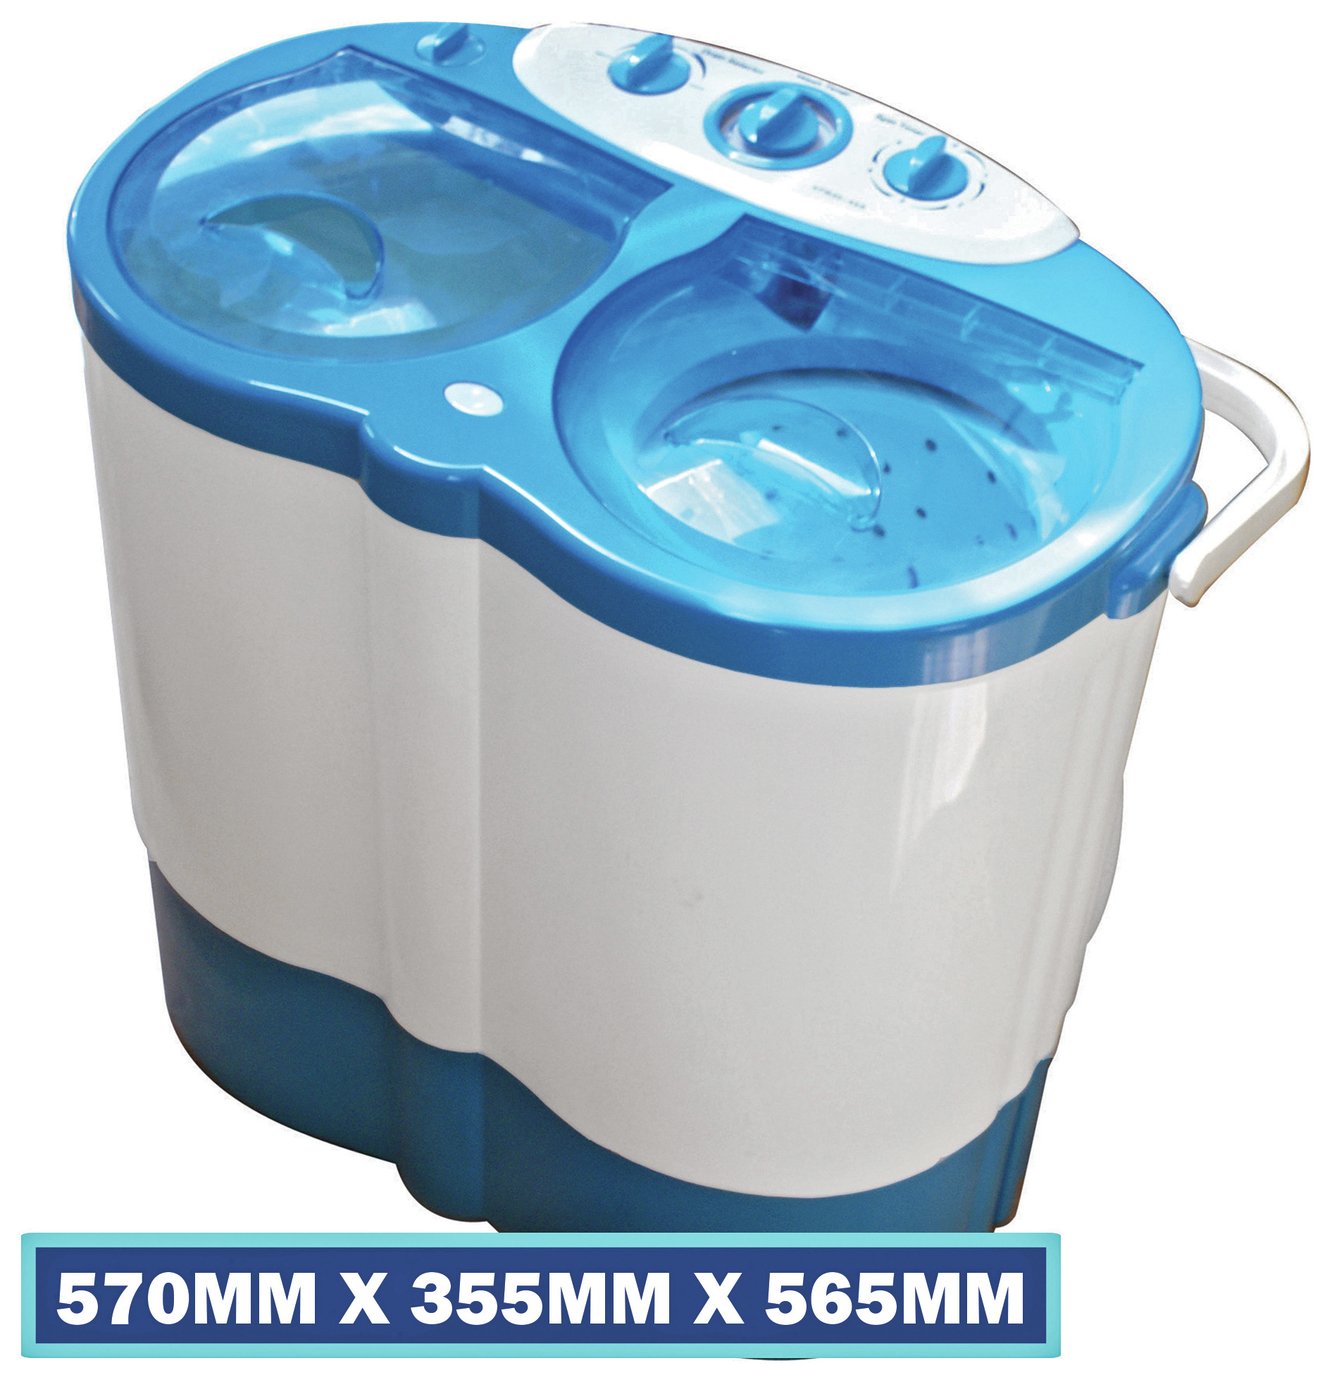 Leisurewize Twin Tub Portable Washing Machine